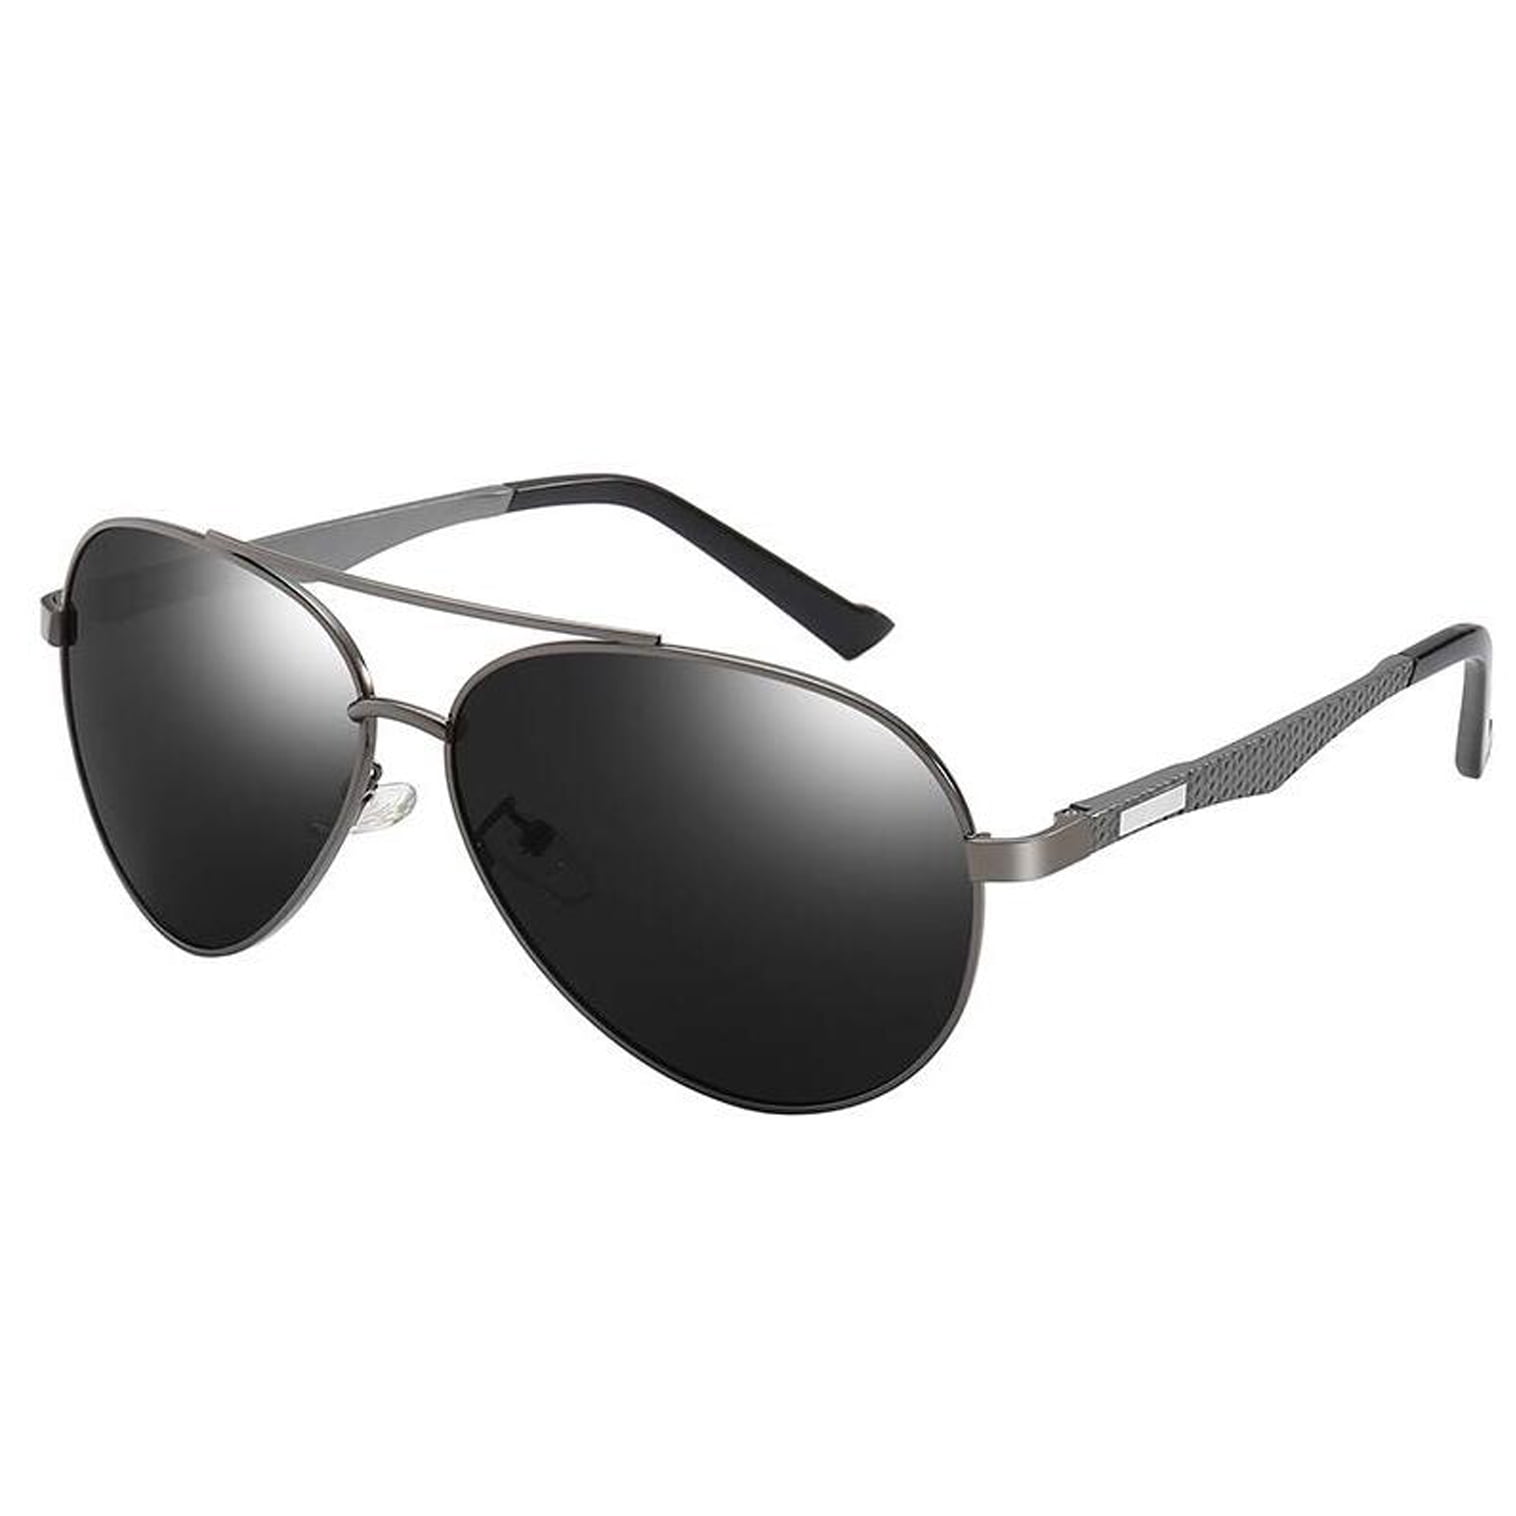 UNISEX Sunglasses Wayfare CLASSIC Black Frame 100% UV MEN WOMEN Retro Aviator US 